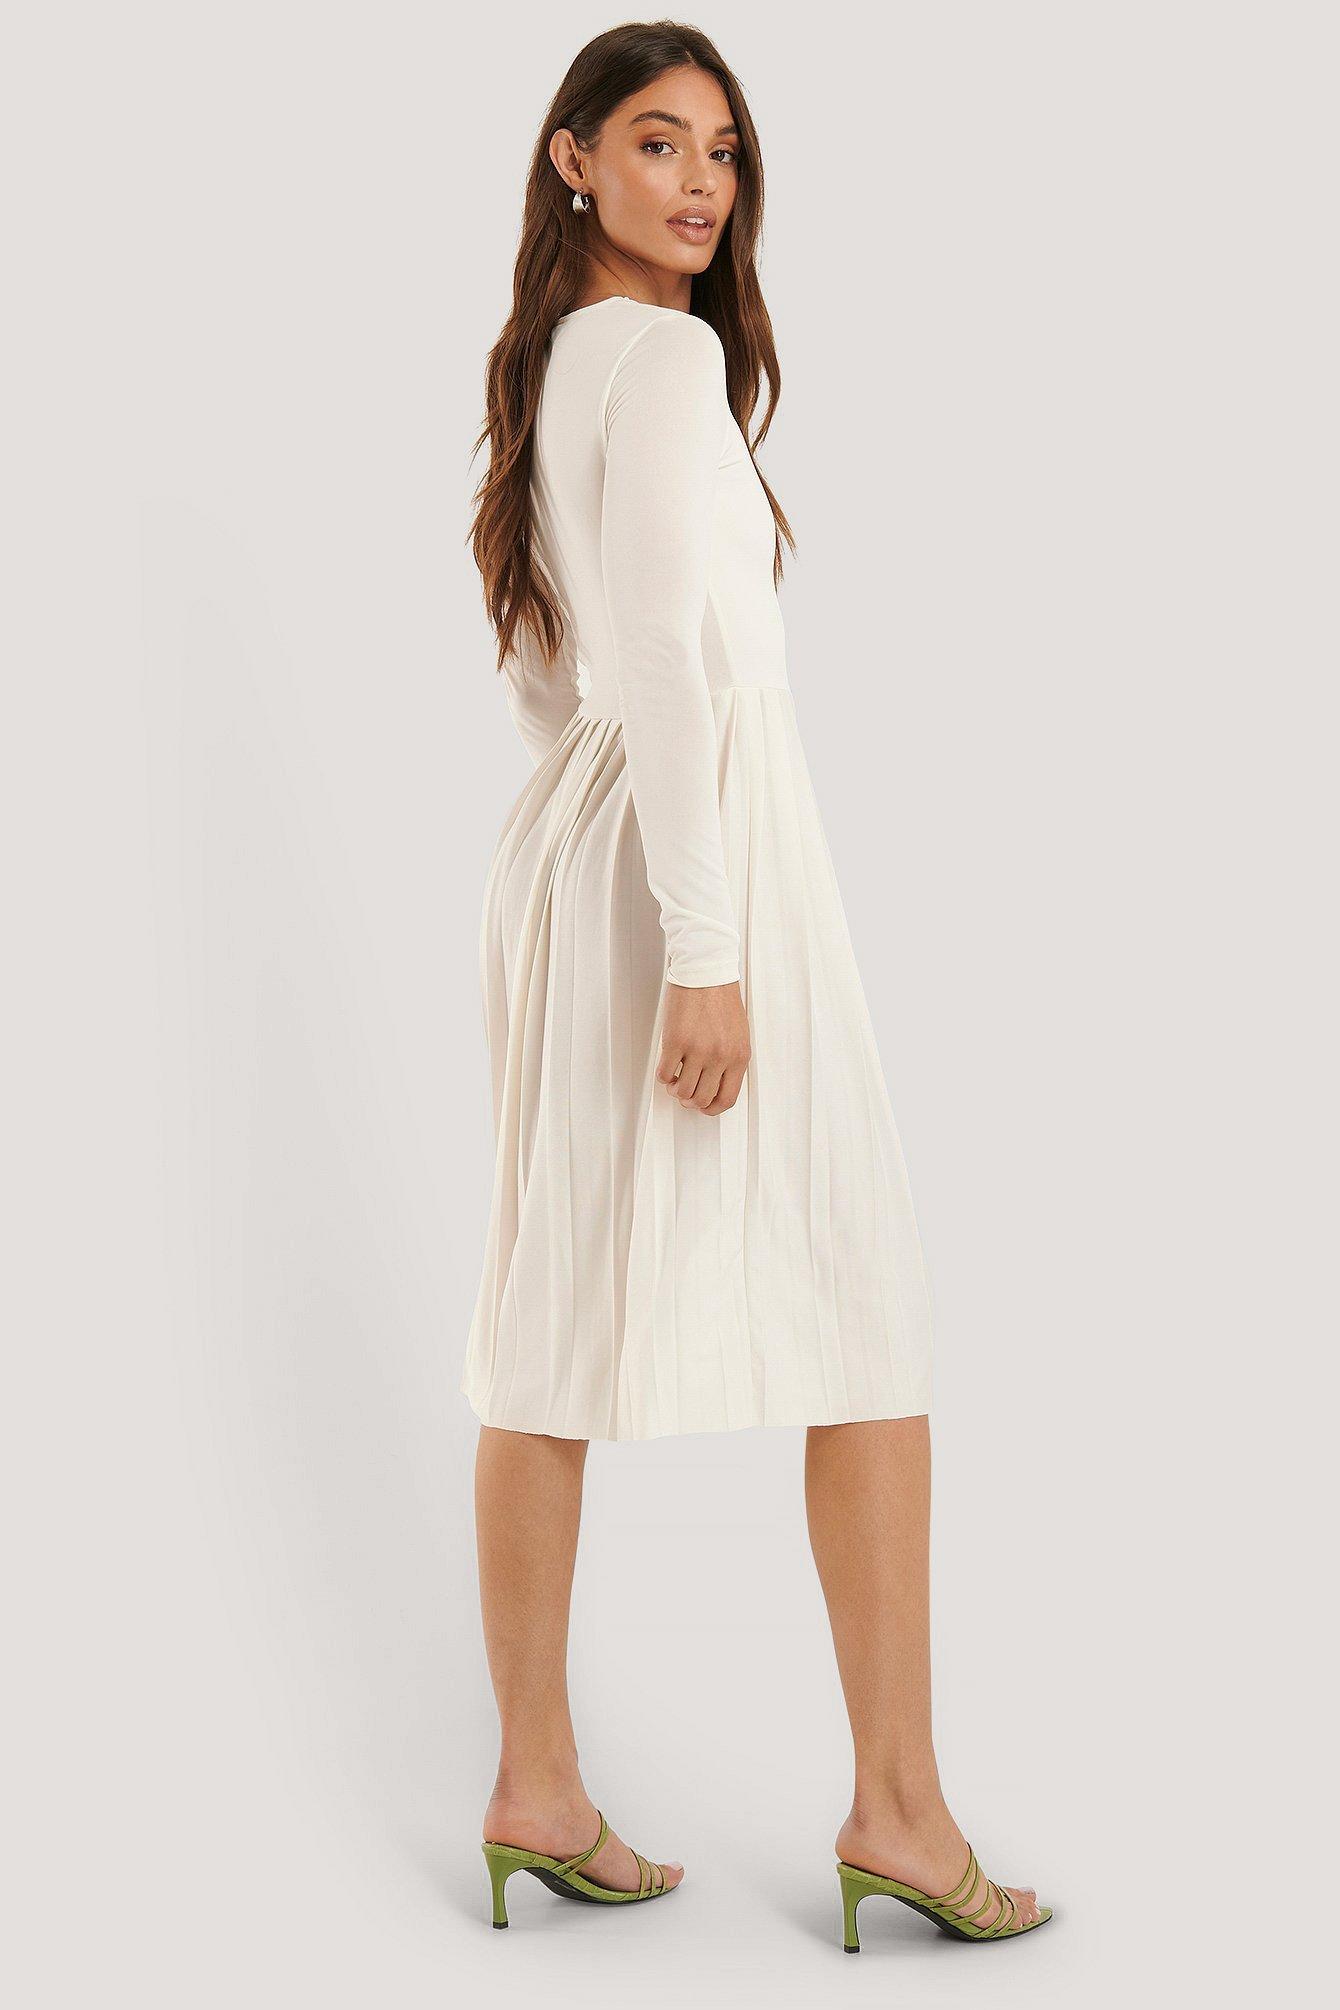 white midi pleated dress Big sale - OFF 66%